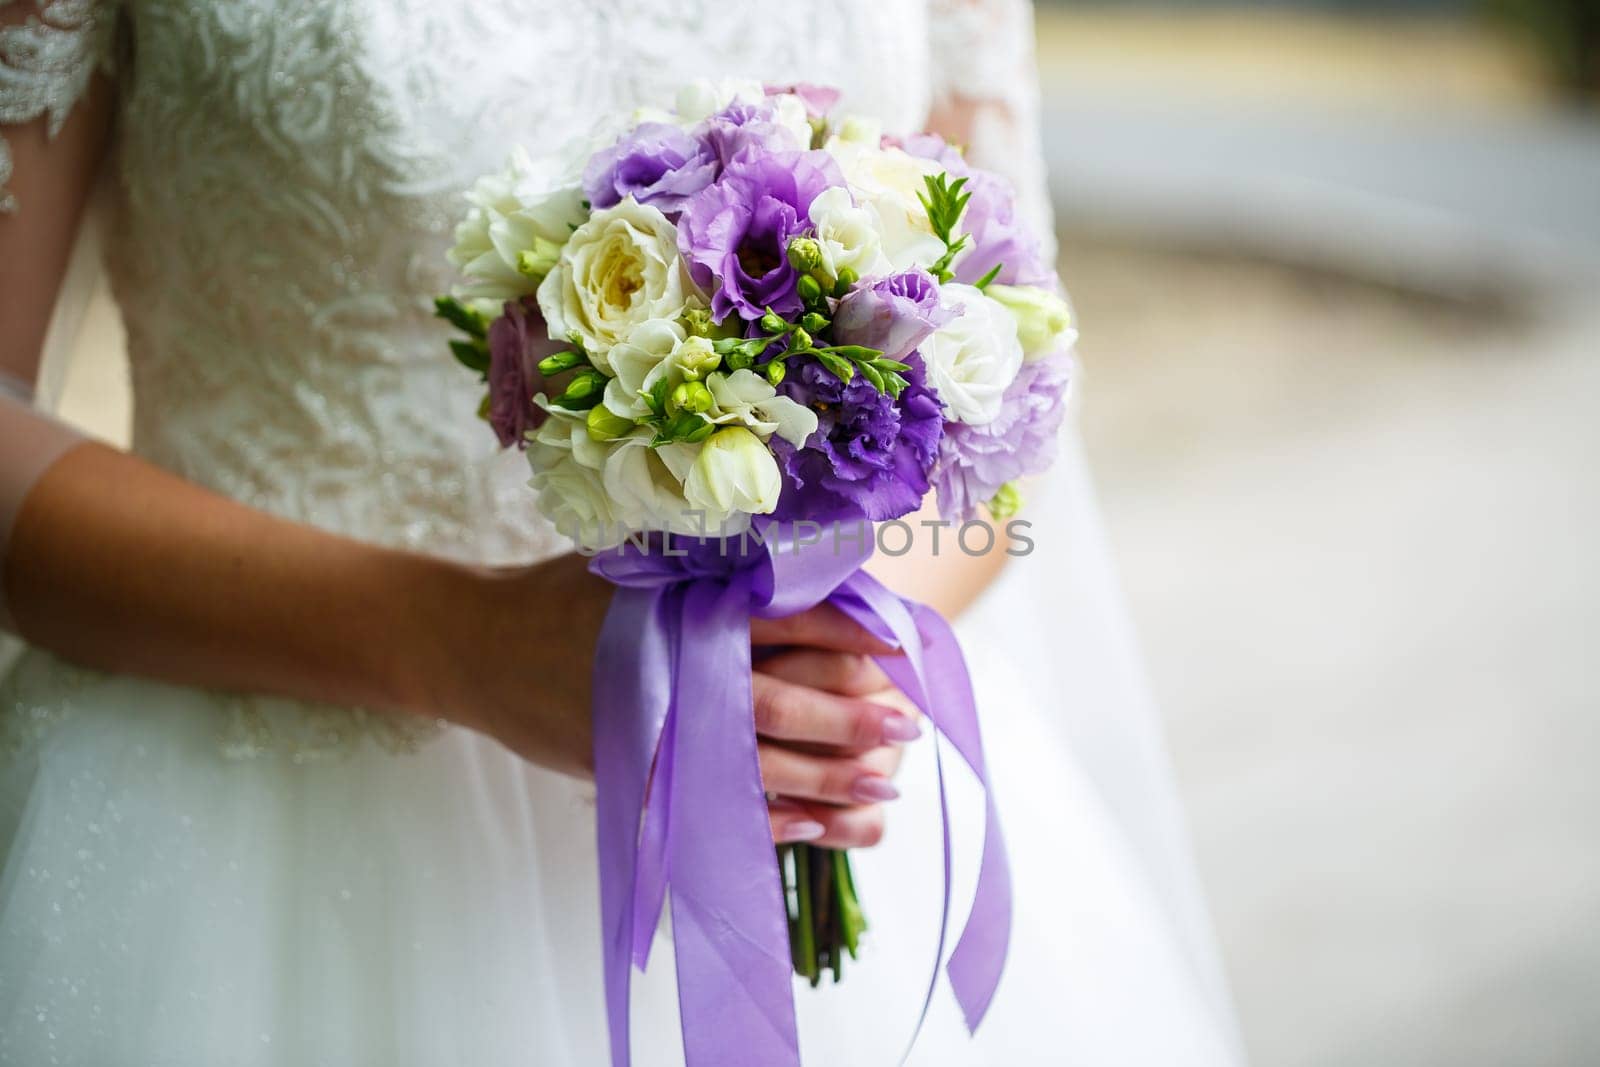 beautiful wedding bouquet for the bride by Dmitrytph